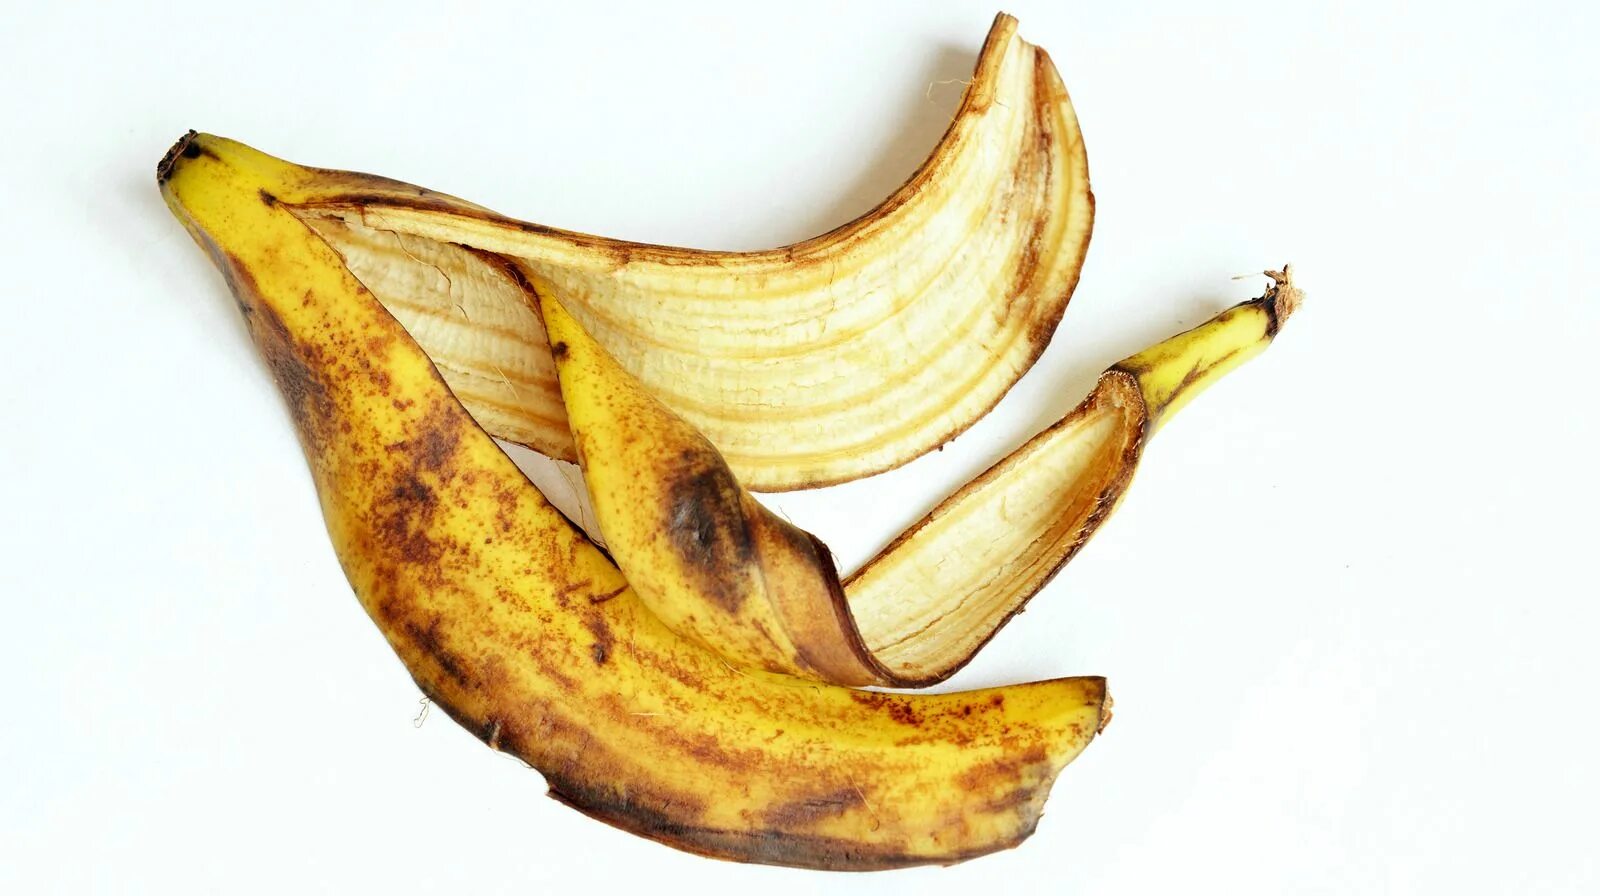 Ел кожуру бананов. Шкурка банана. Банан без шкурки. Банановая кожура. Банановая кожура вид сверху.